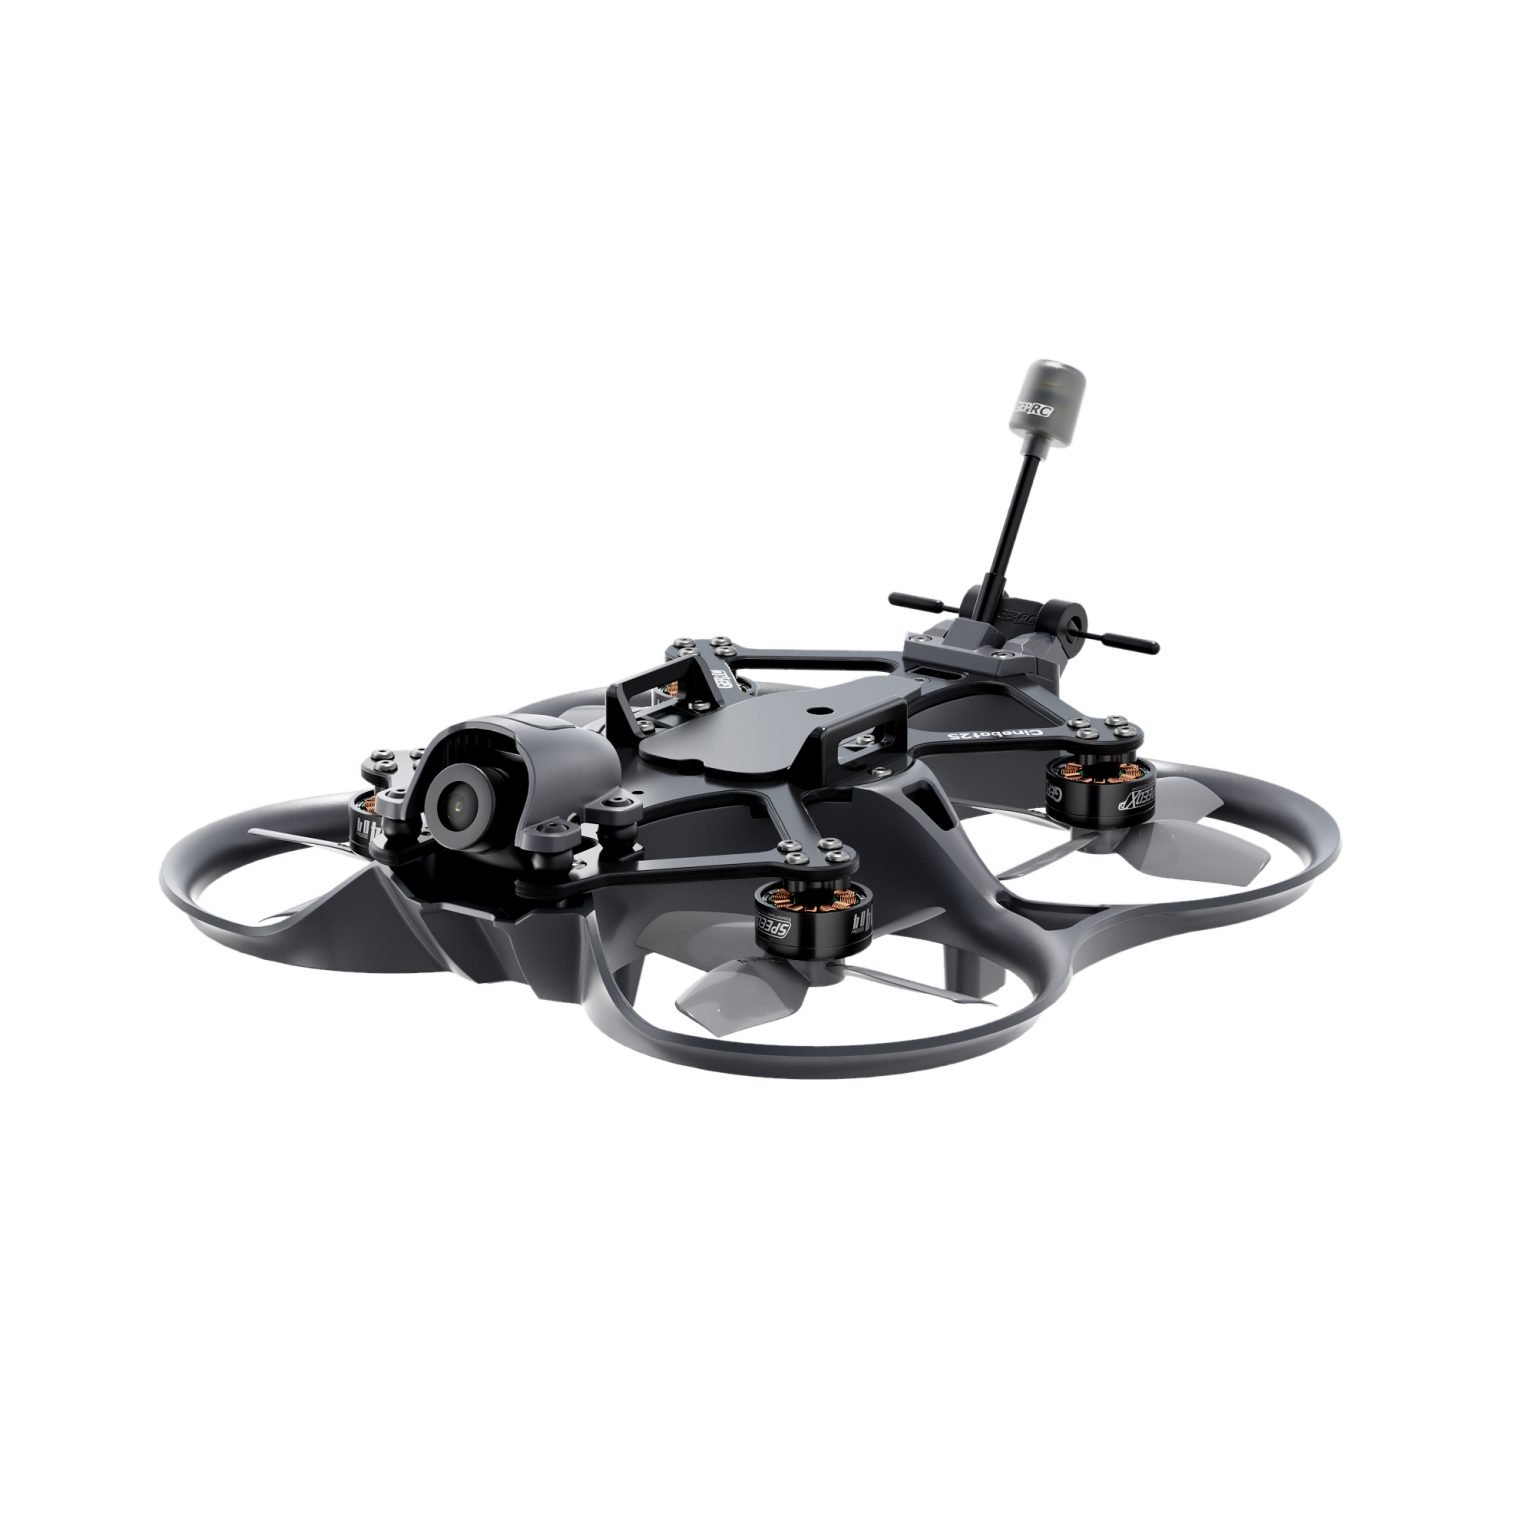 GEPRC Cinebot25 Analog Quadcopter - ELRS 2.4G